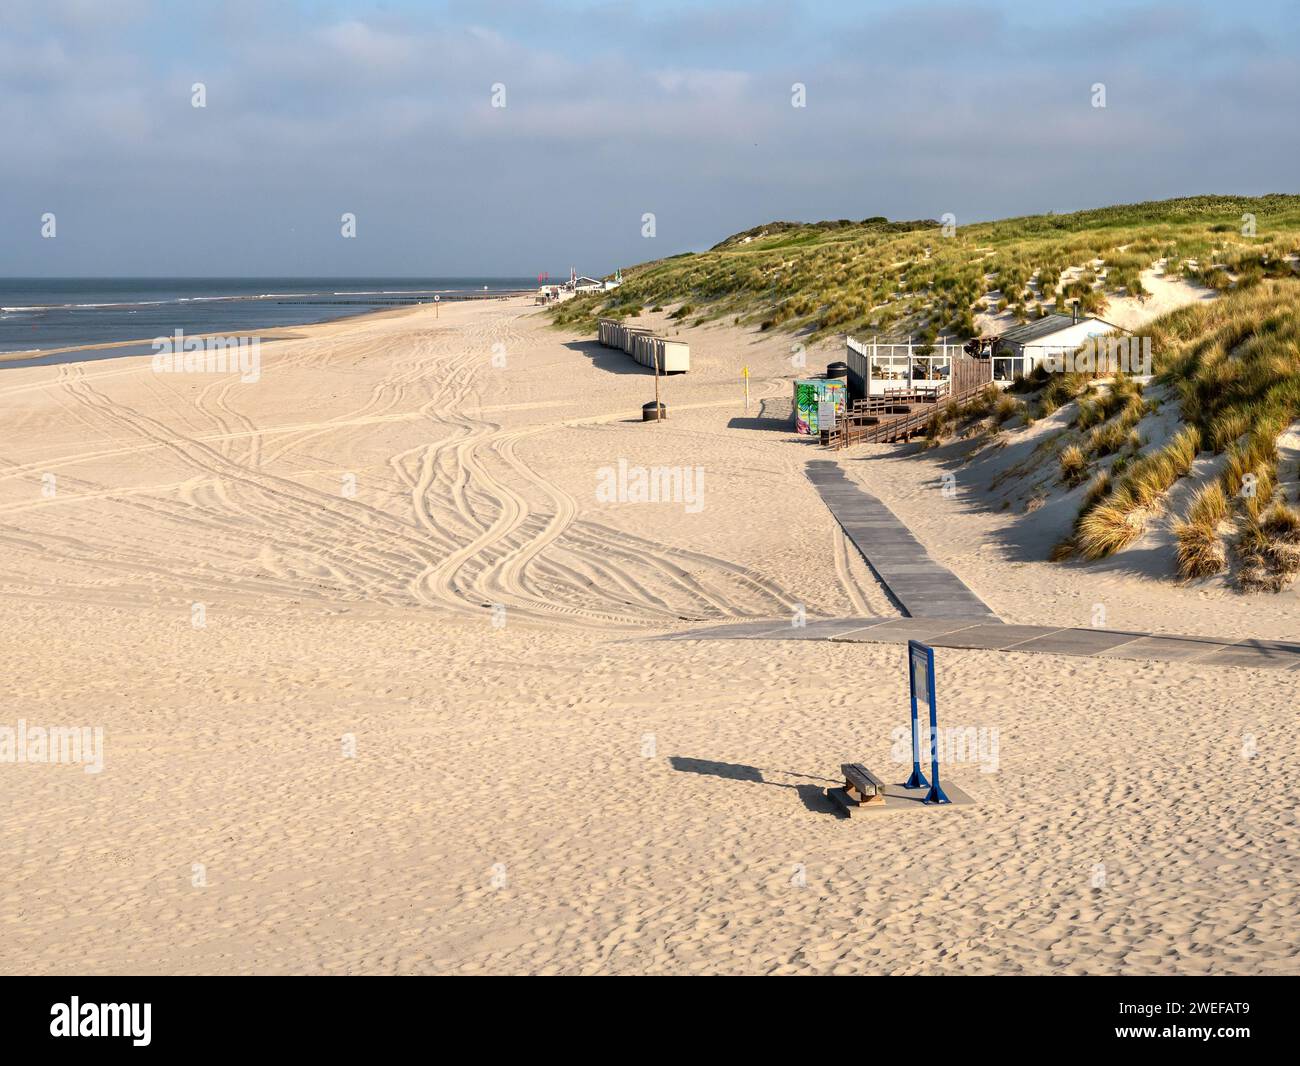 Dune e spiaggia di Westenschouwen De Punt sulla costa del Mare del Nord vicino a Burgh-Haamstede, Schouwen-Duiveland, Zelanda, Paesi Bassi Foto Stock